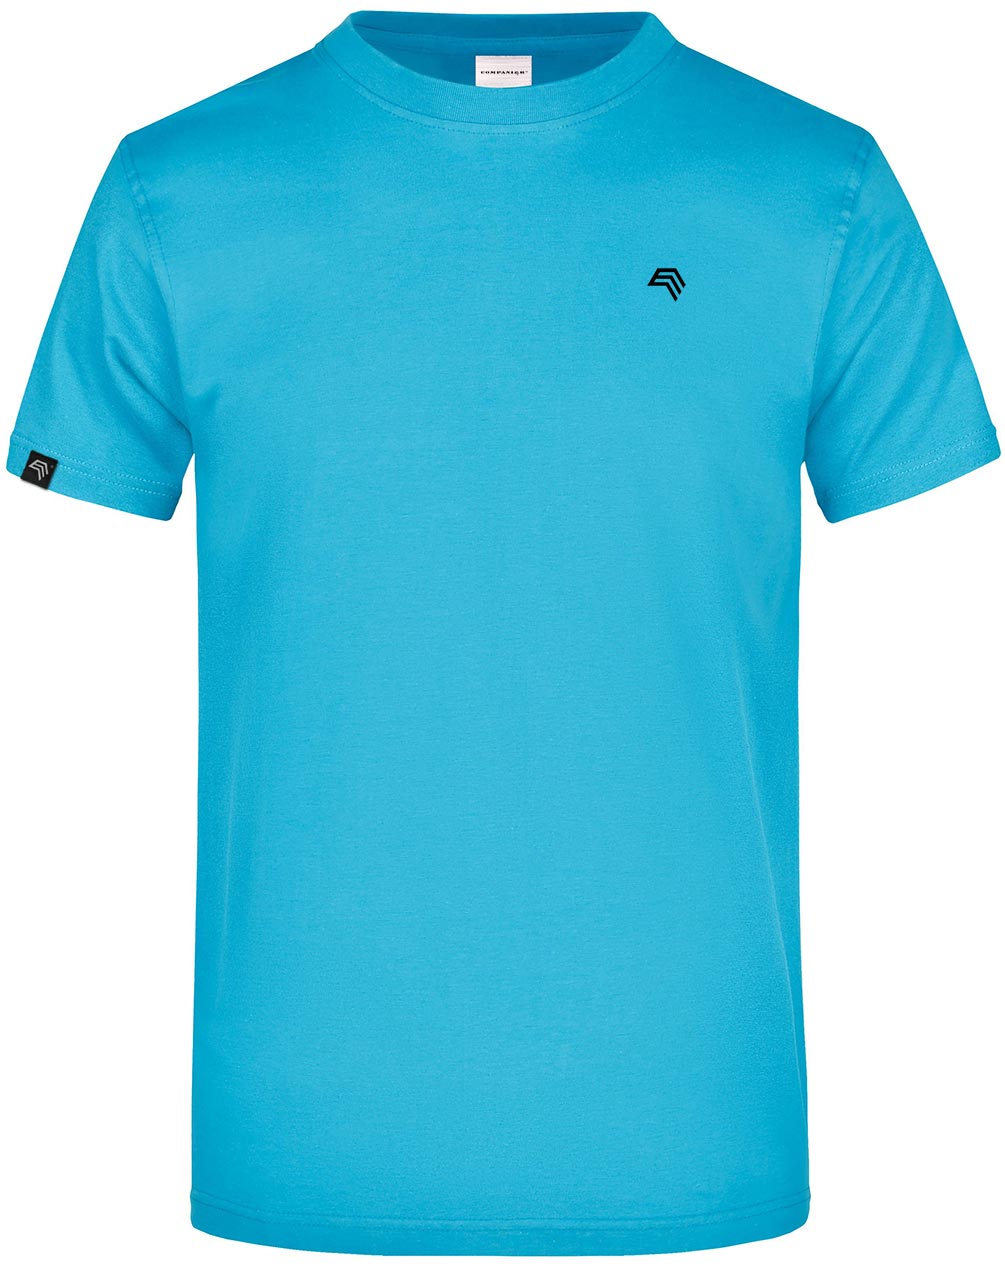 JAN 0002 ― Herren Heavy Komfort T-Shirt - Turquoise Blau Türkis